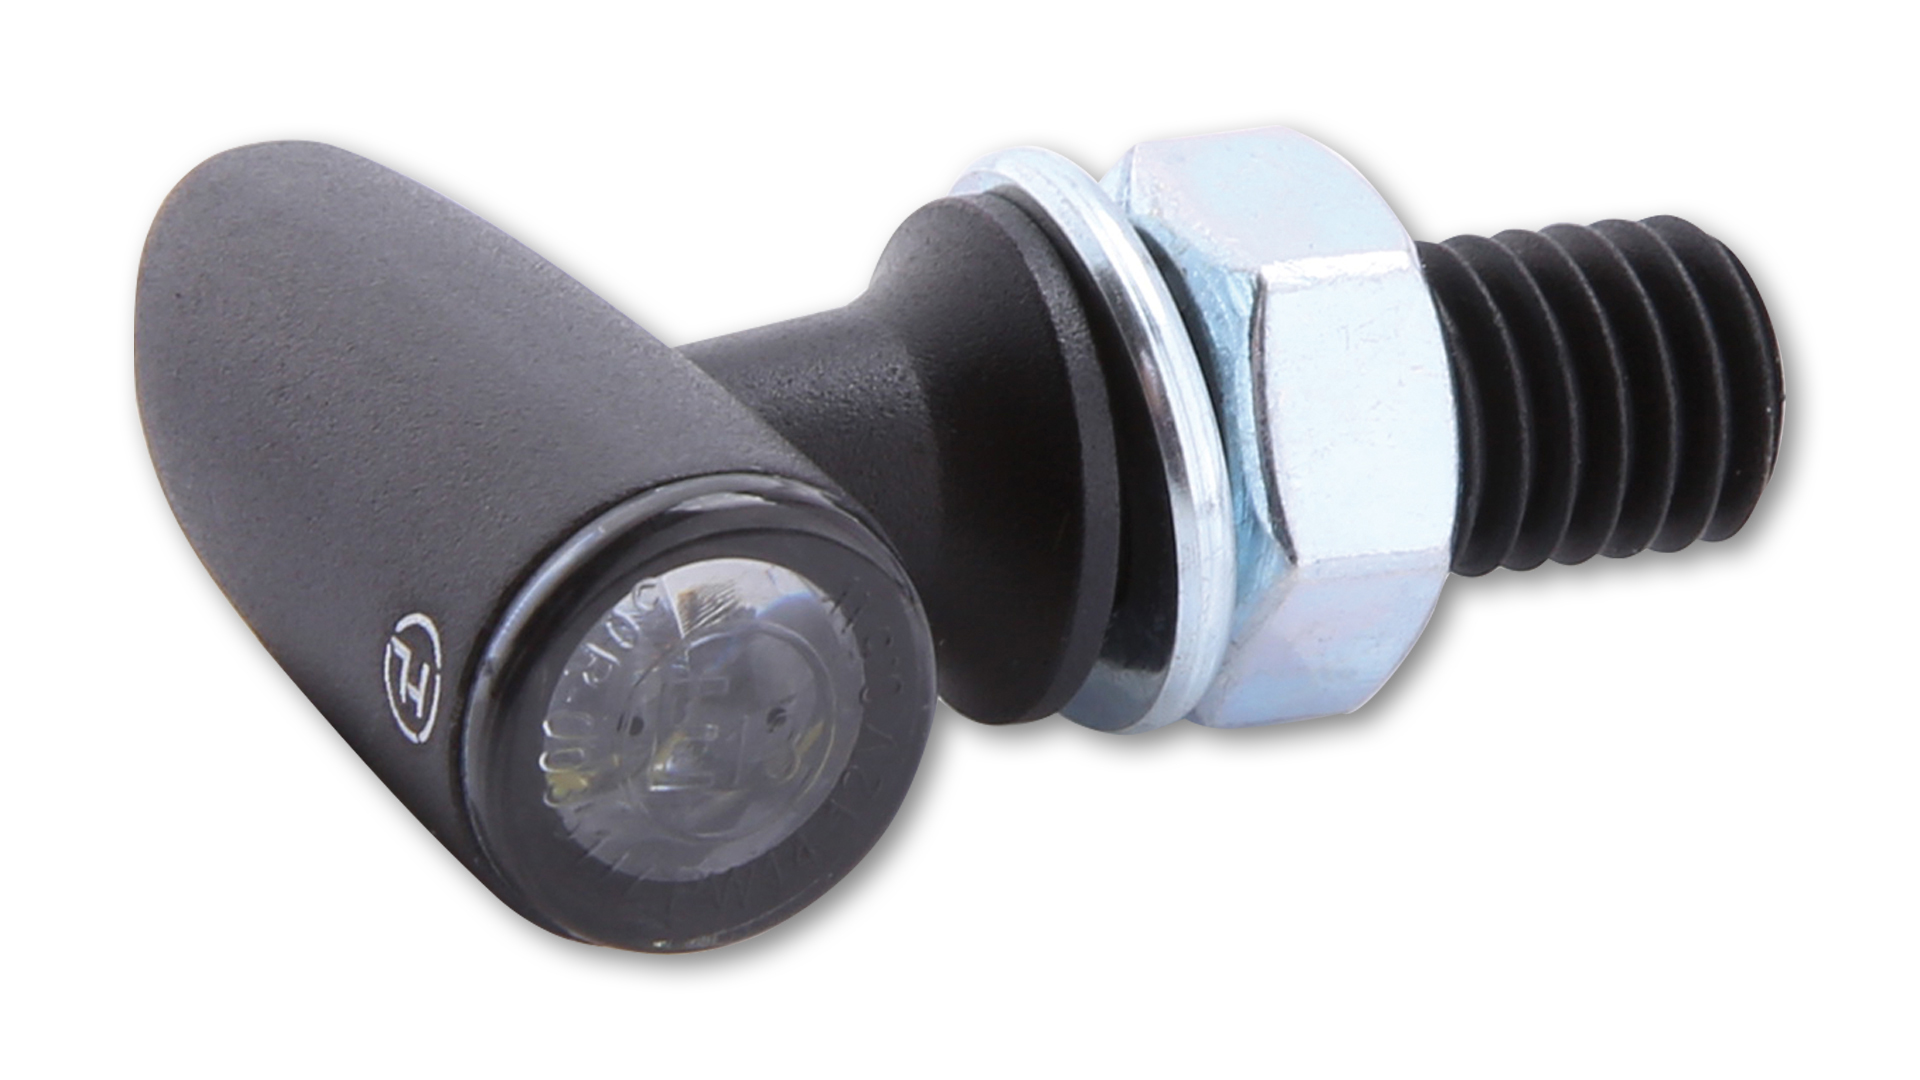 HIGHSIDER PROTON ONE LED Blinker/Positionslicht, getöntes Glas, E-geprüft, Paar.